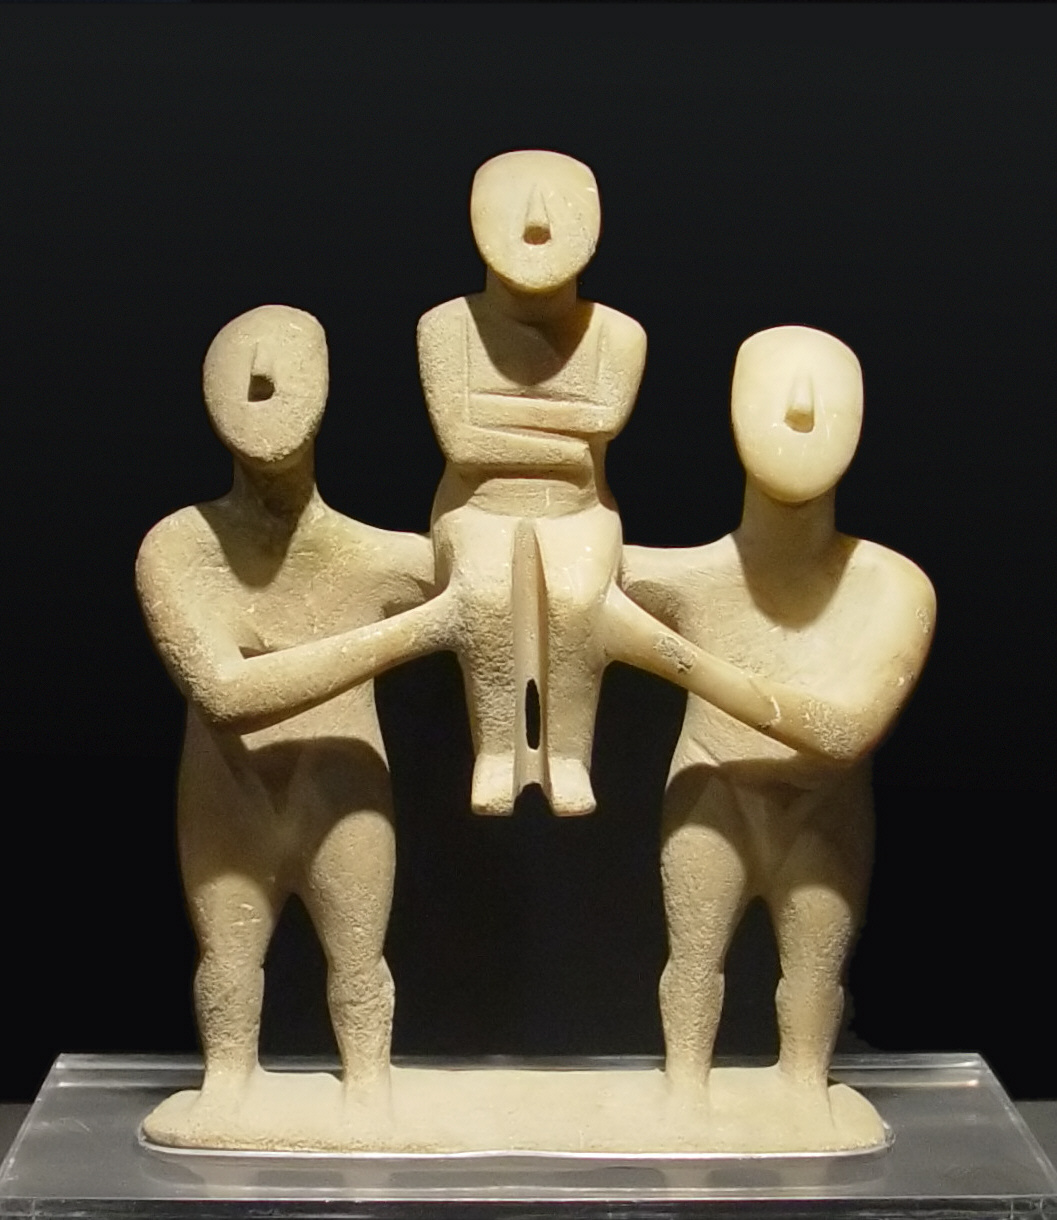 Cycladic culture group of idols